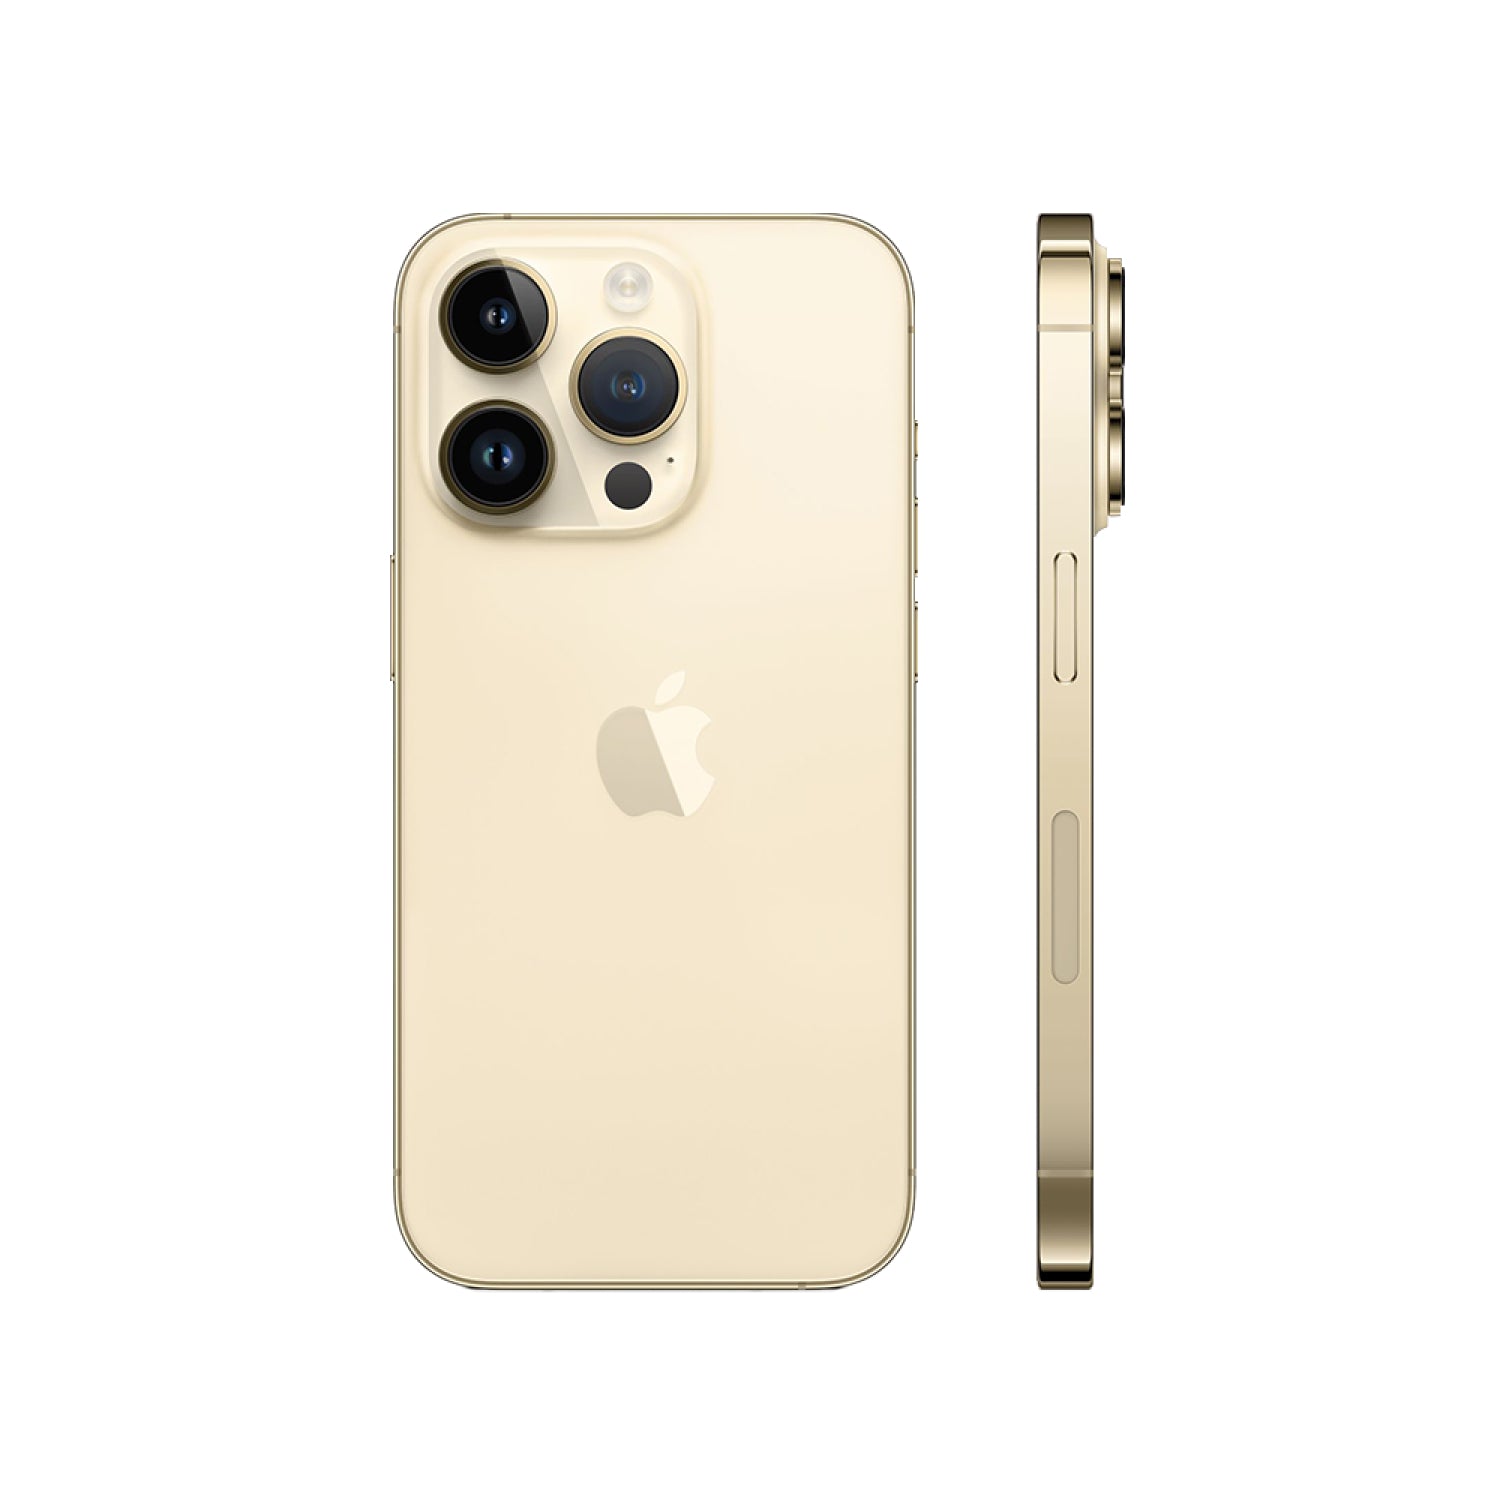 iPhone 14 Pro 512GB Gold - Fair condition